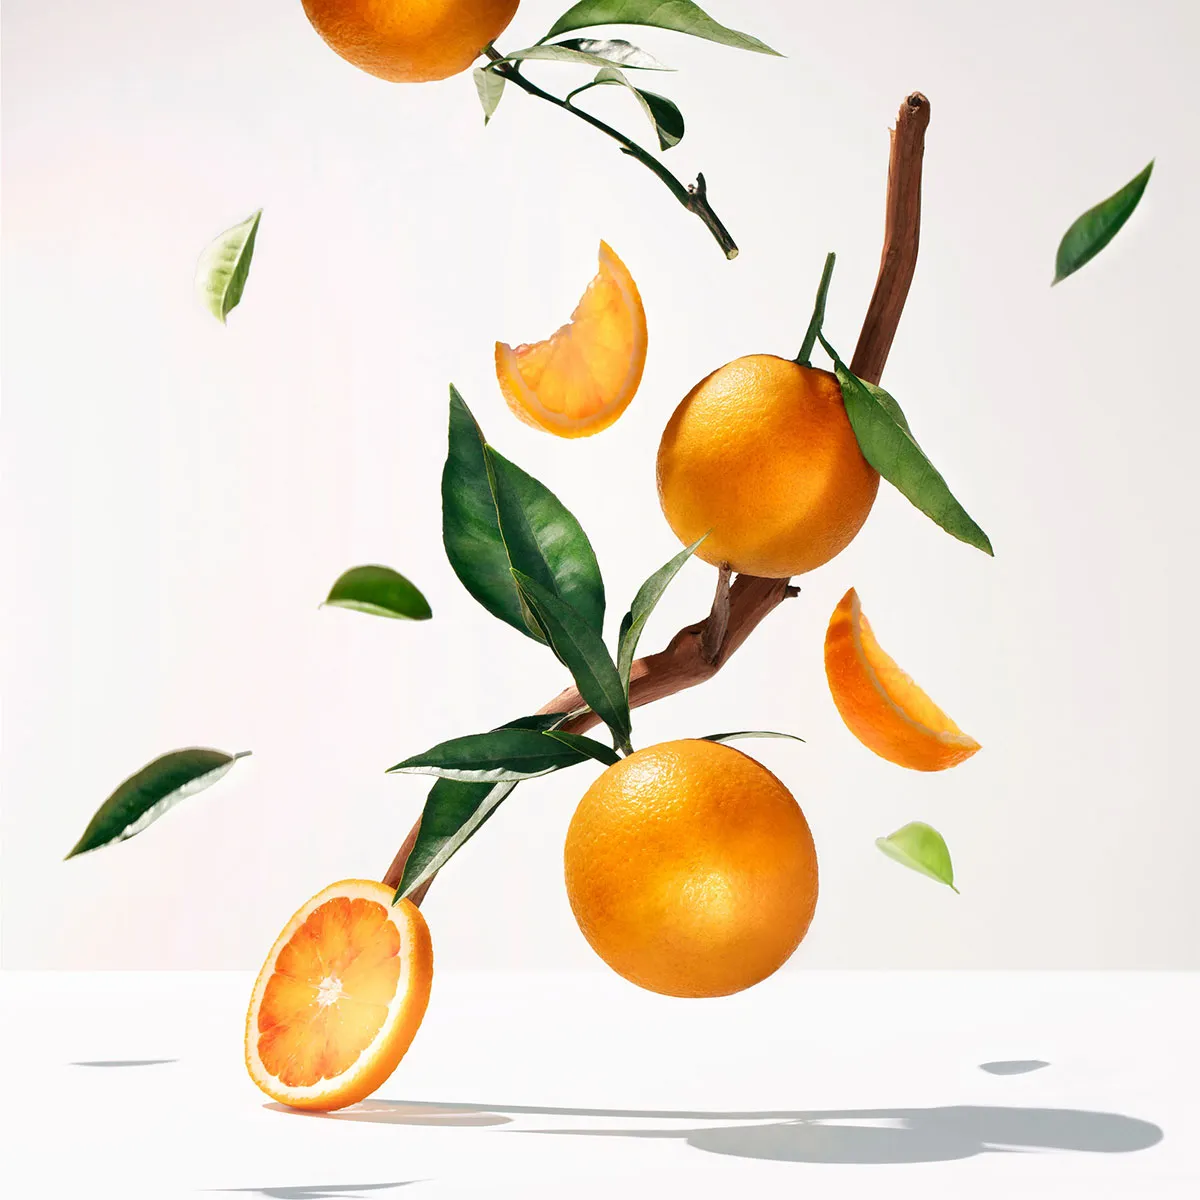 R&G Bois D'Orange Eau Parfumée 100 ml Acqua profumata di benessere